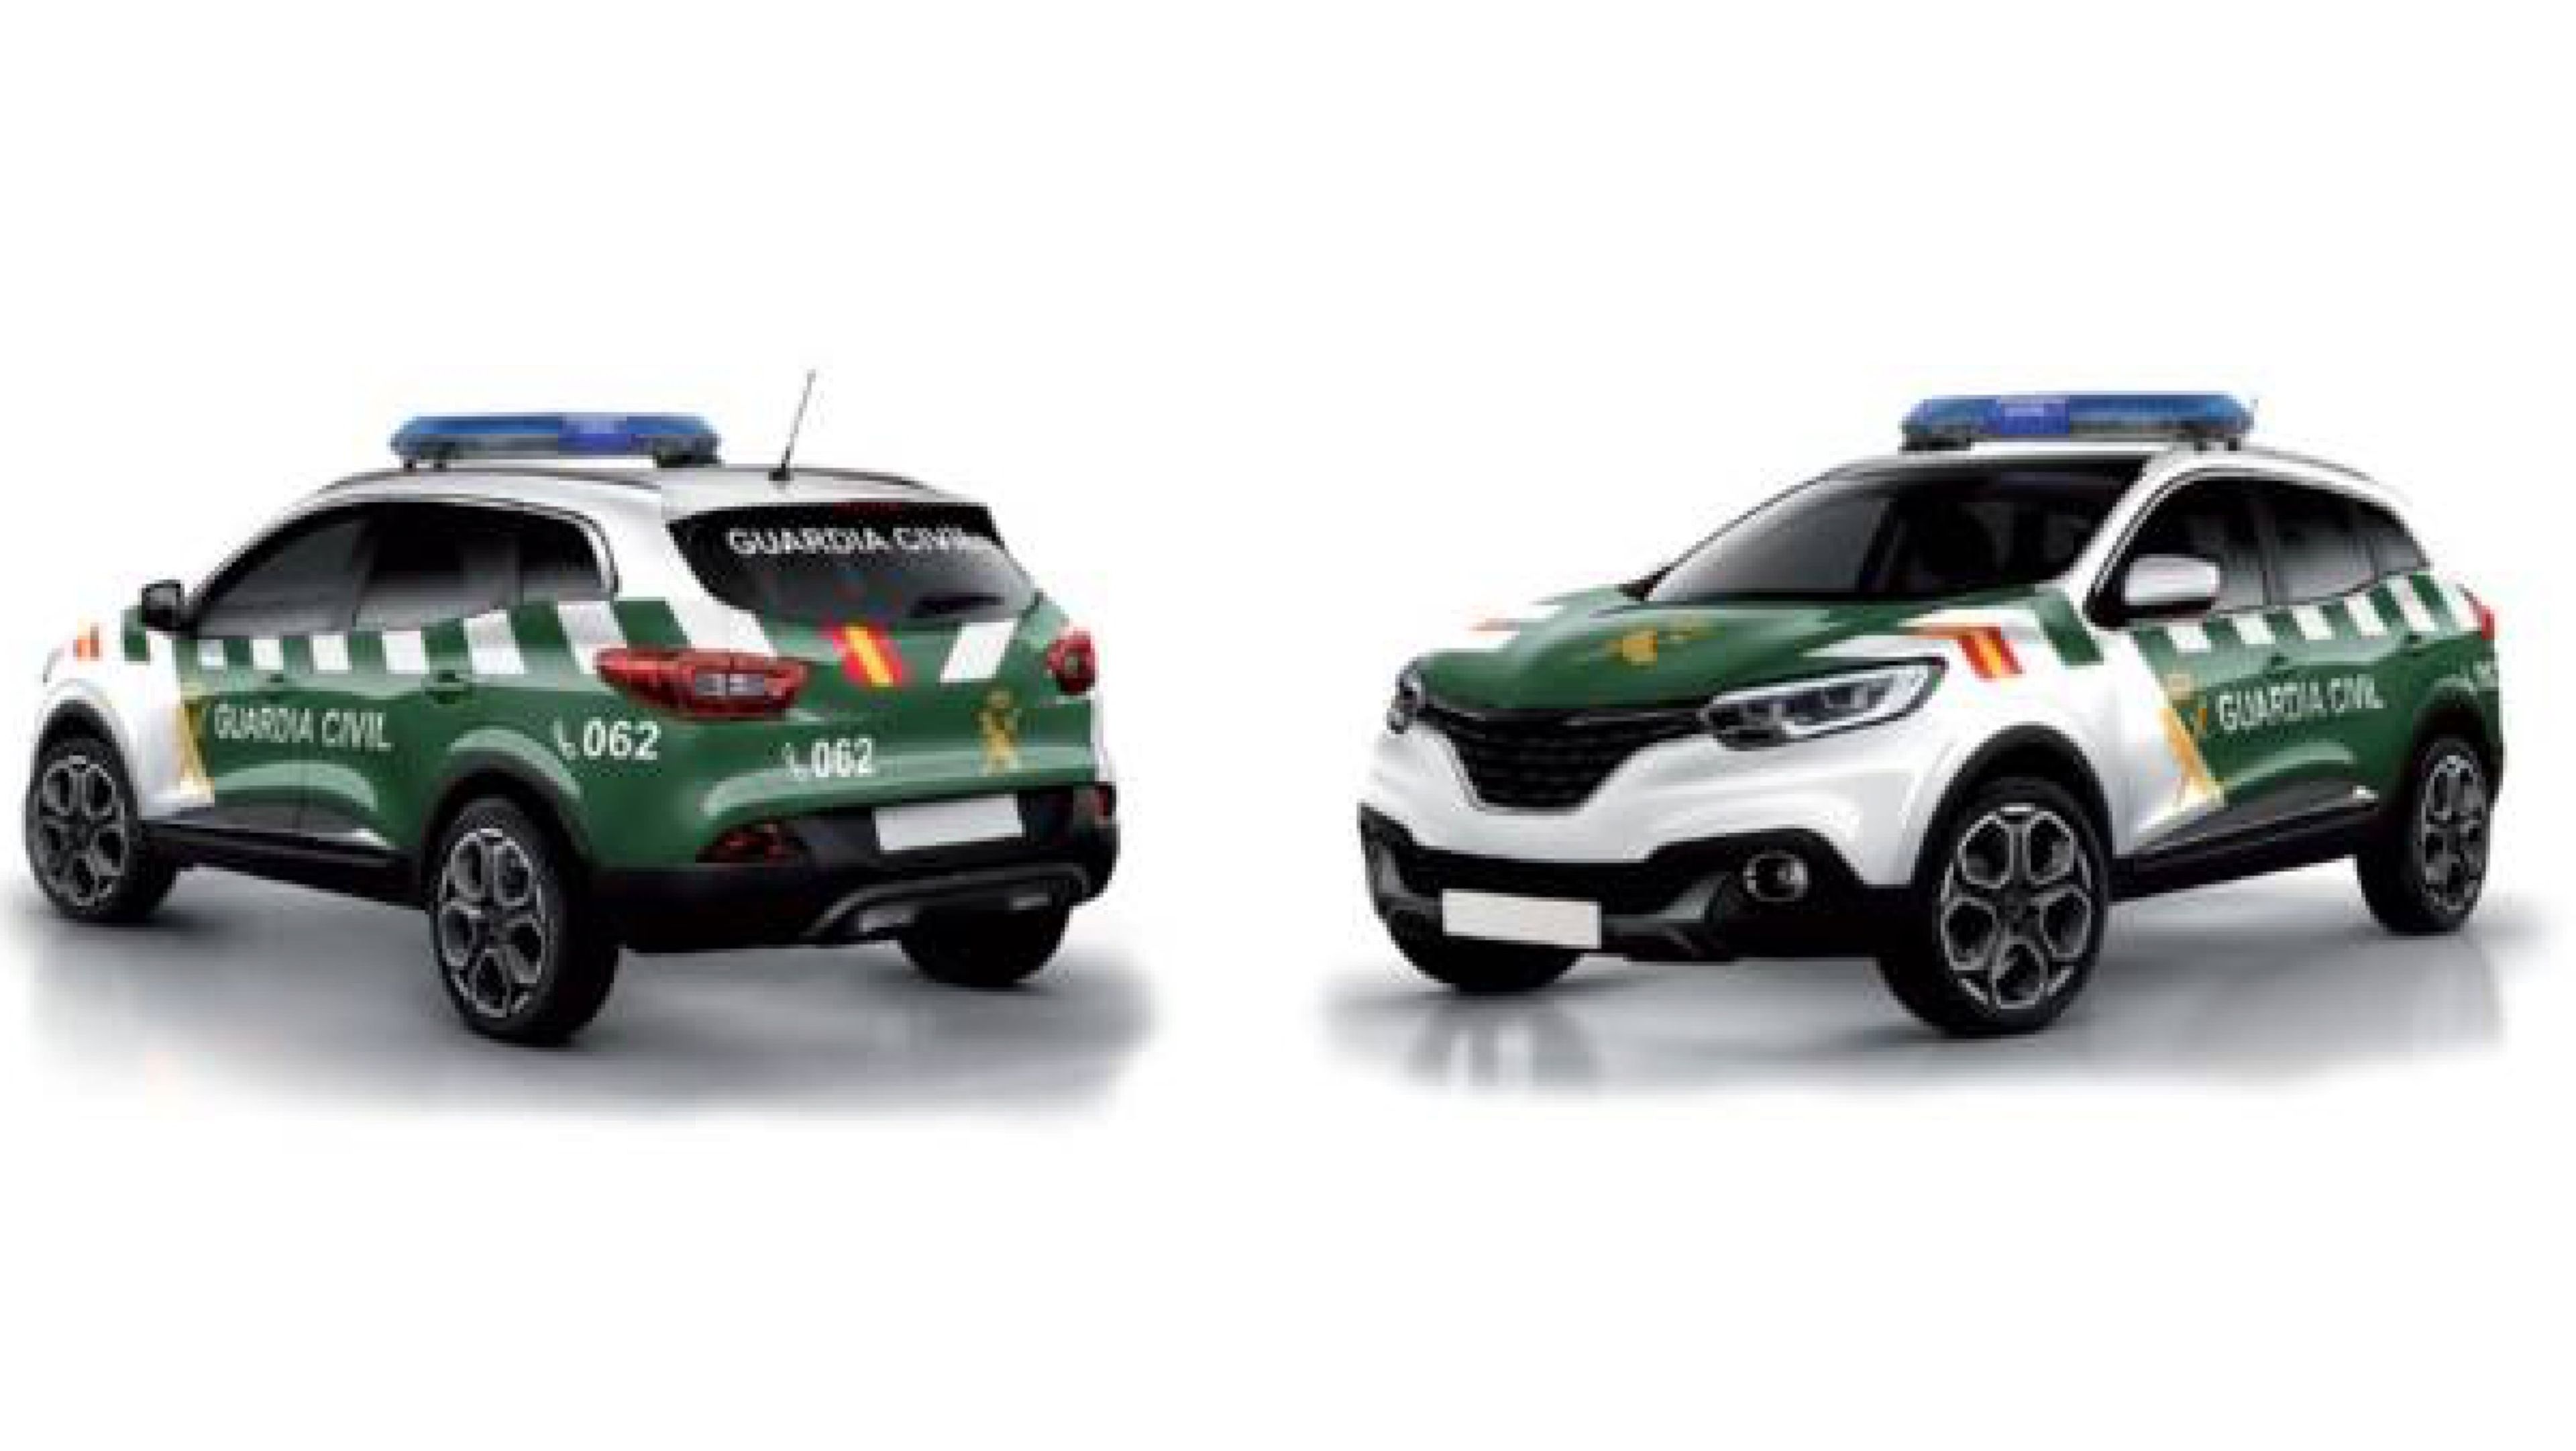 Nuevos coches de la Guardia Civil